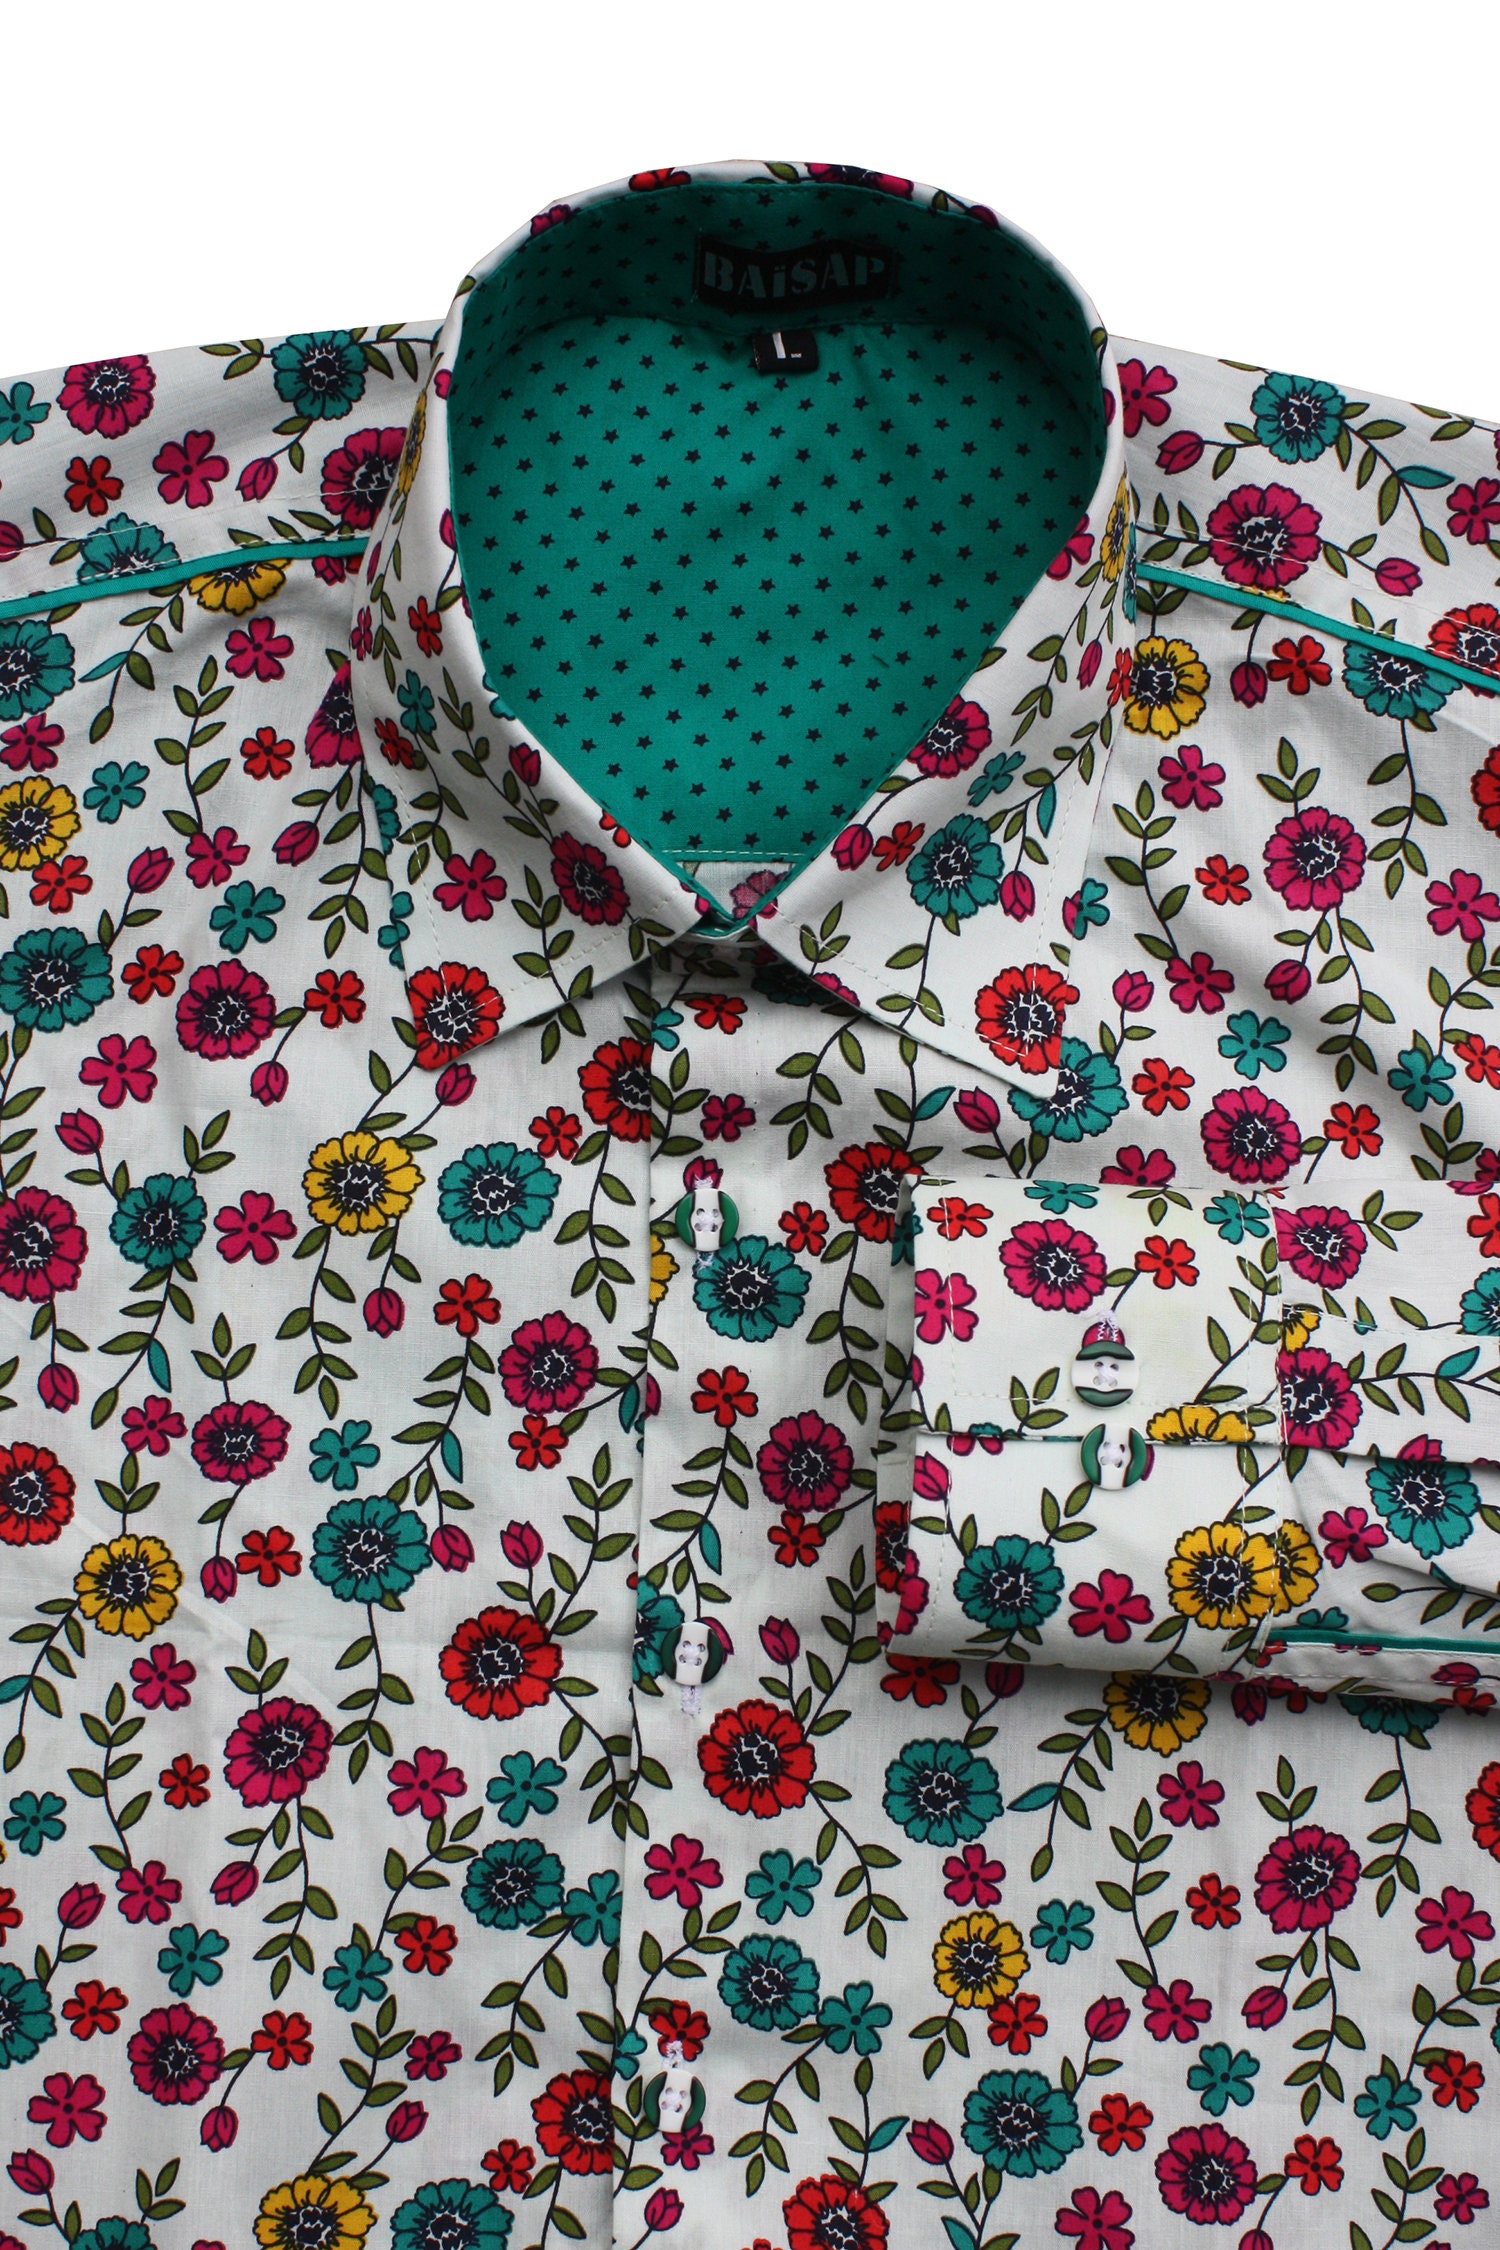 Men's Floral Shirts, Floral Print Shirts